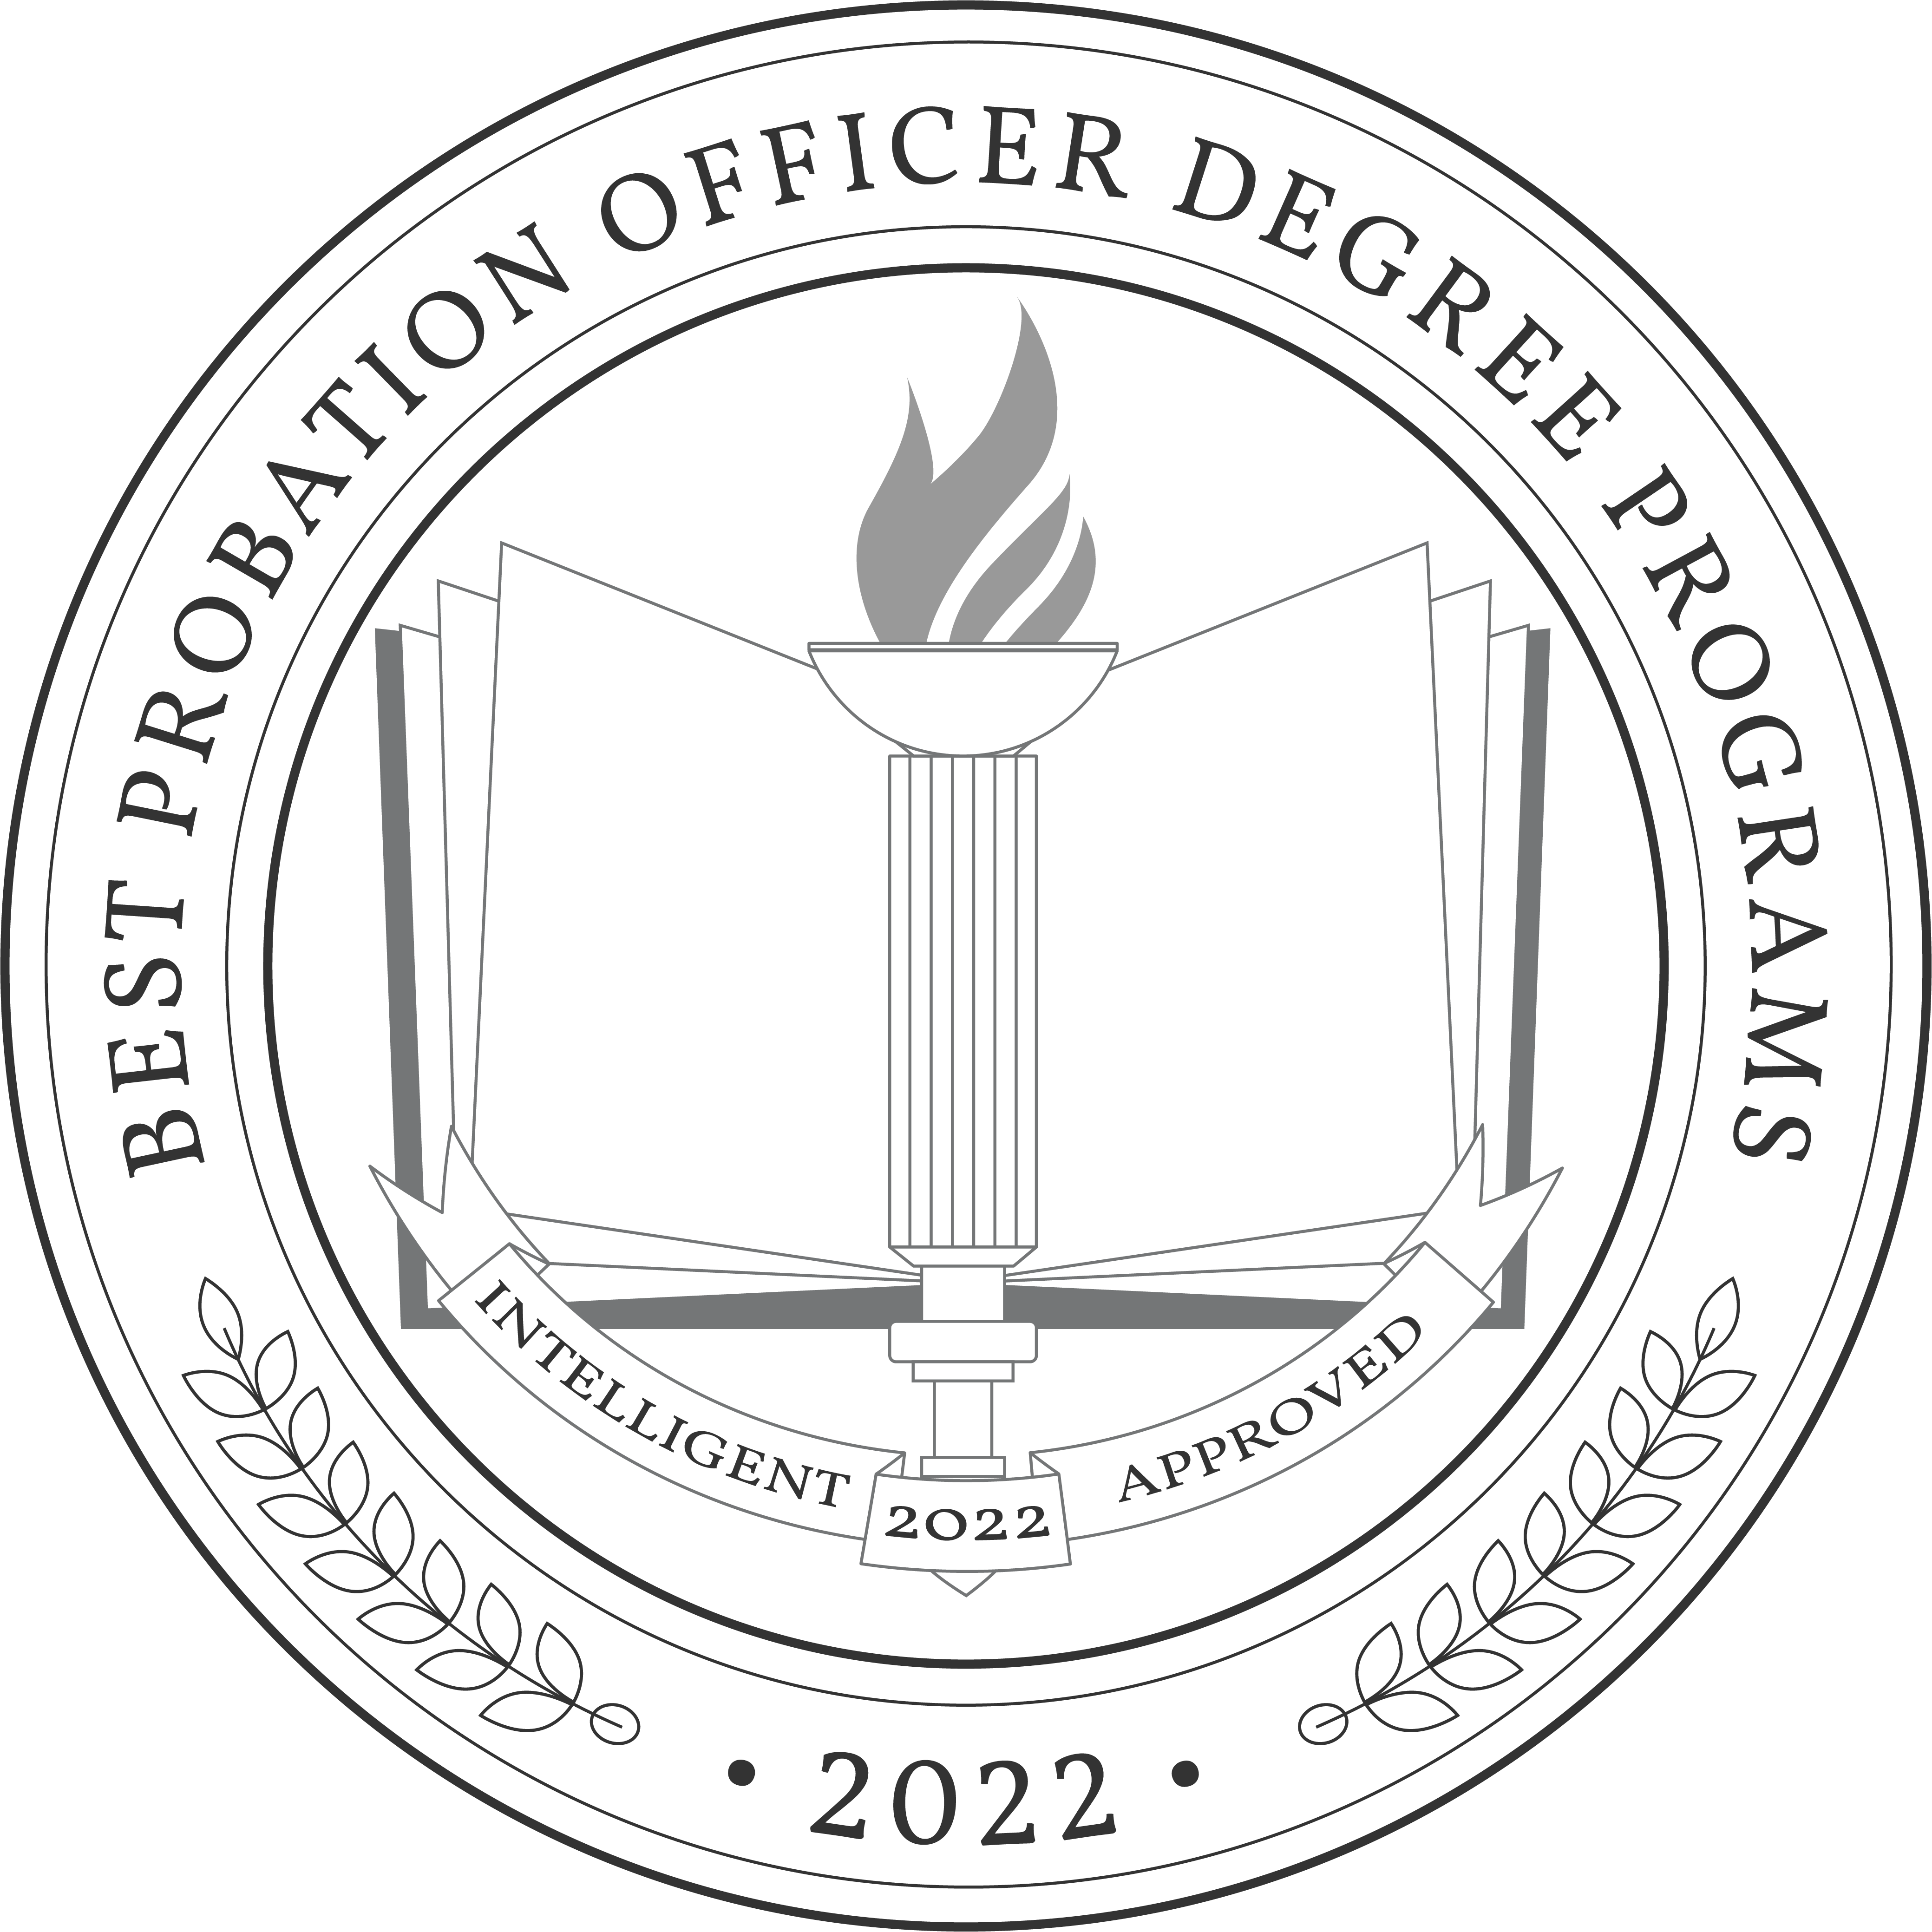 Best Probation Officer Degree Programs